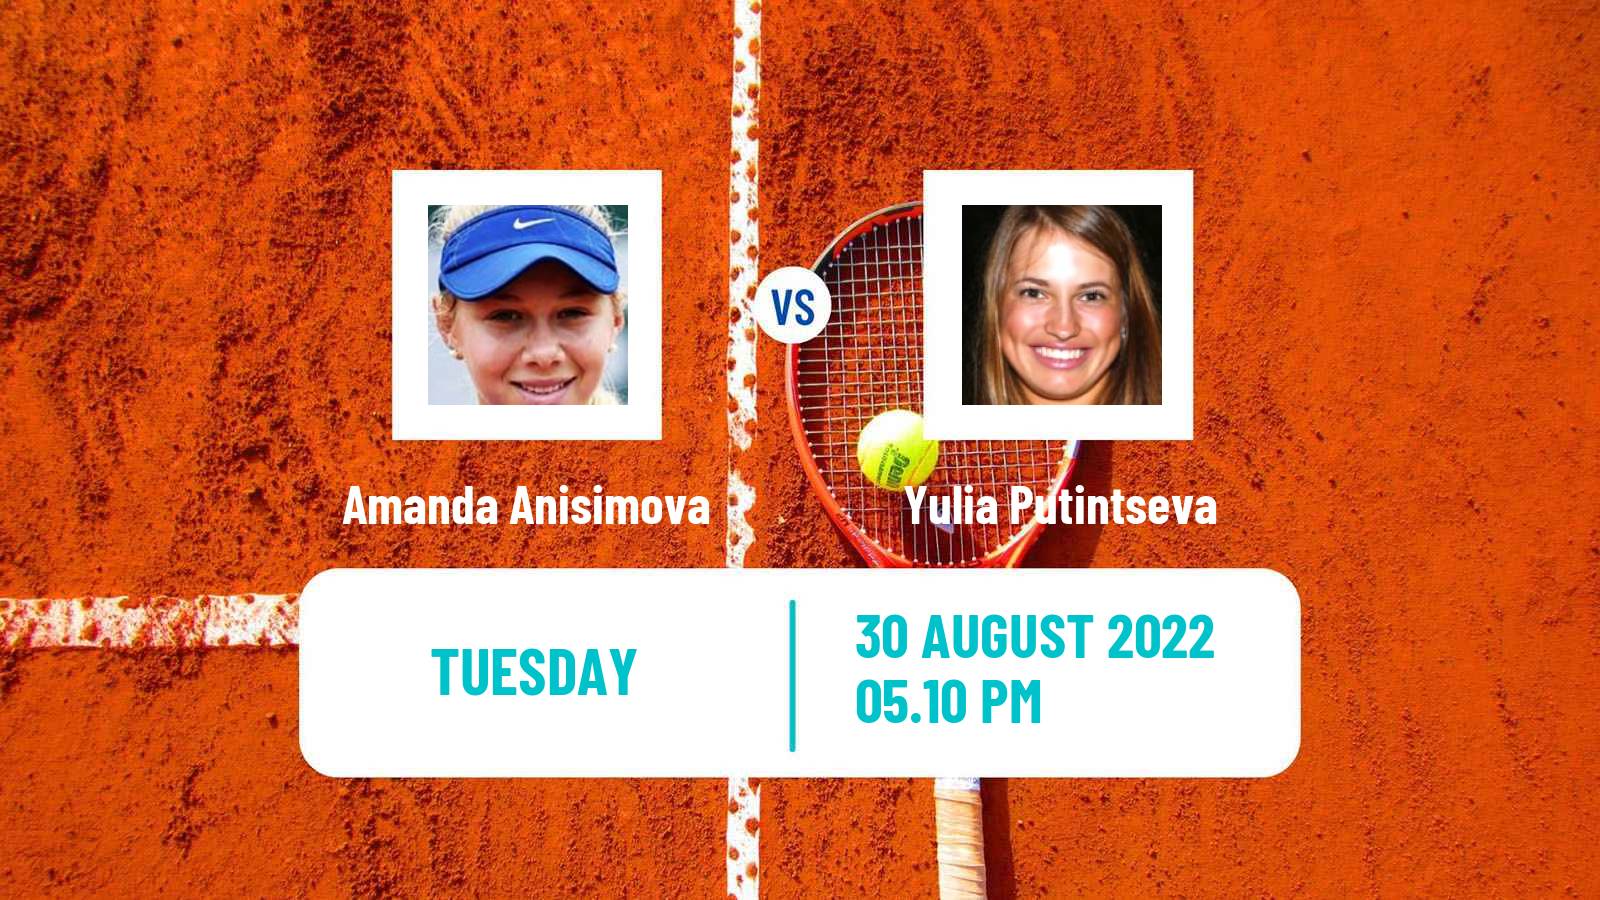 Tennis WTA US Open Amanda Anisimova - Yulia Putintseva